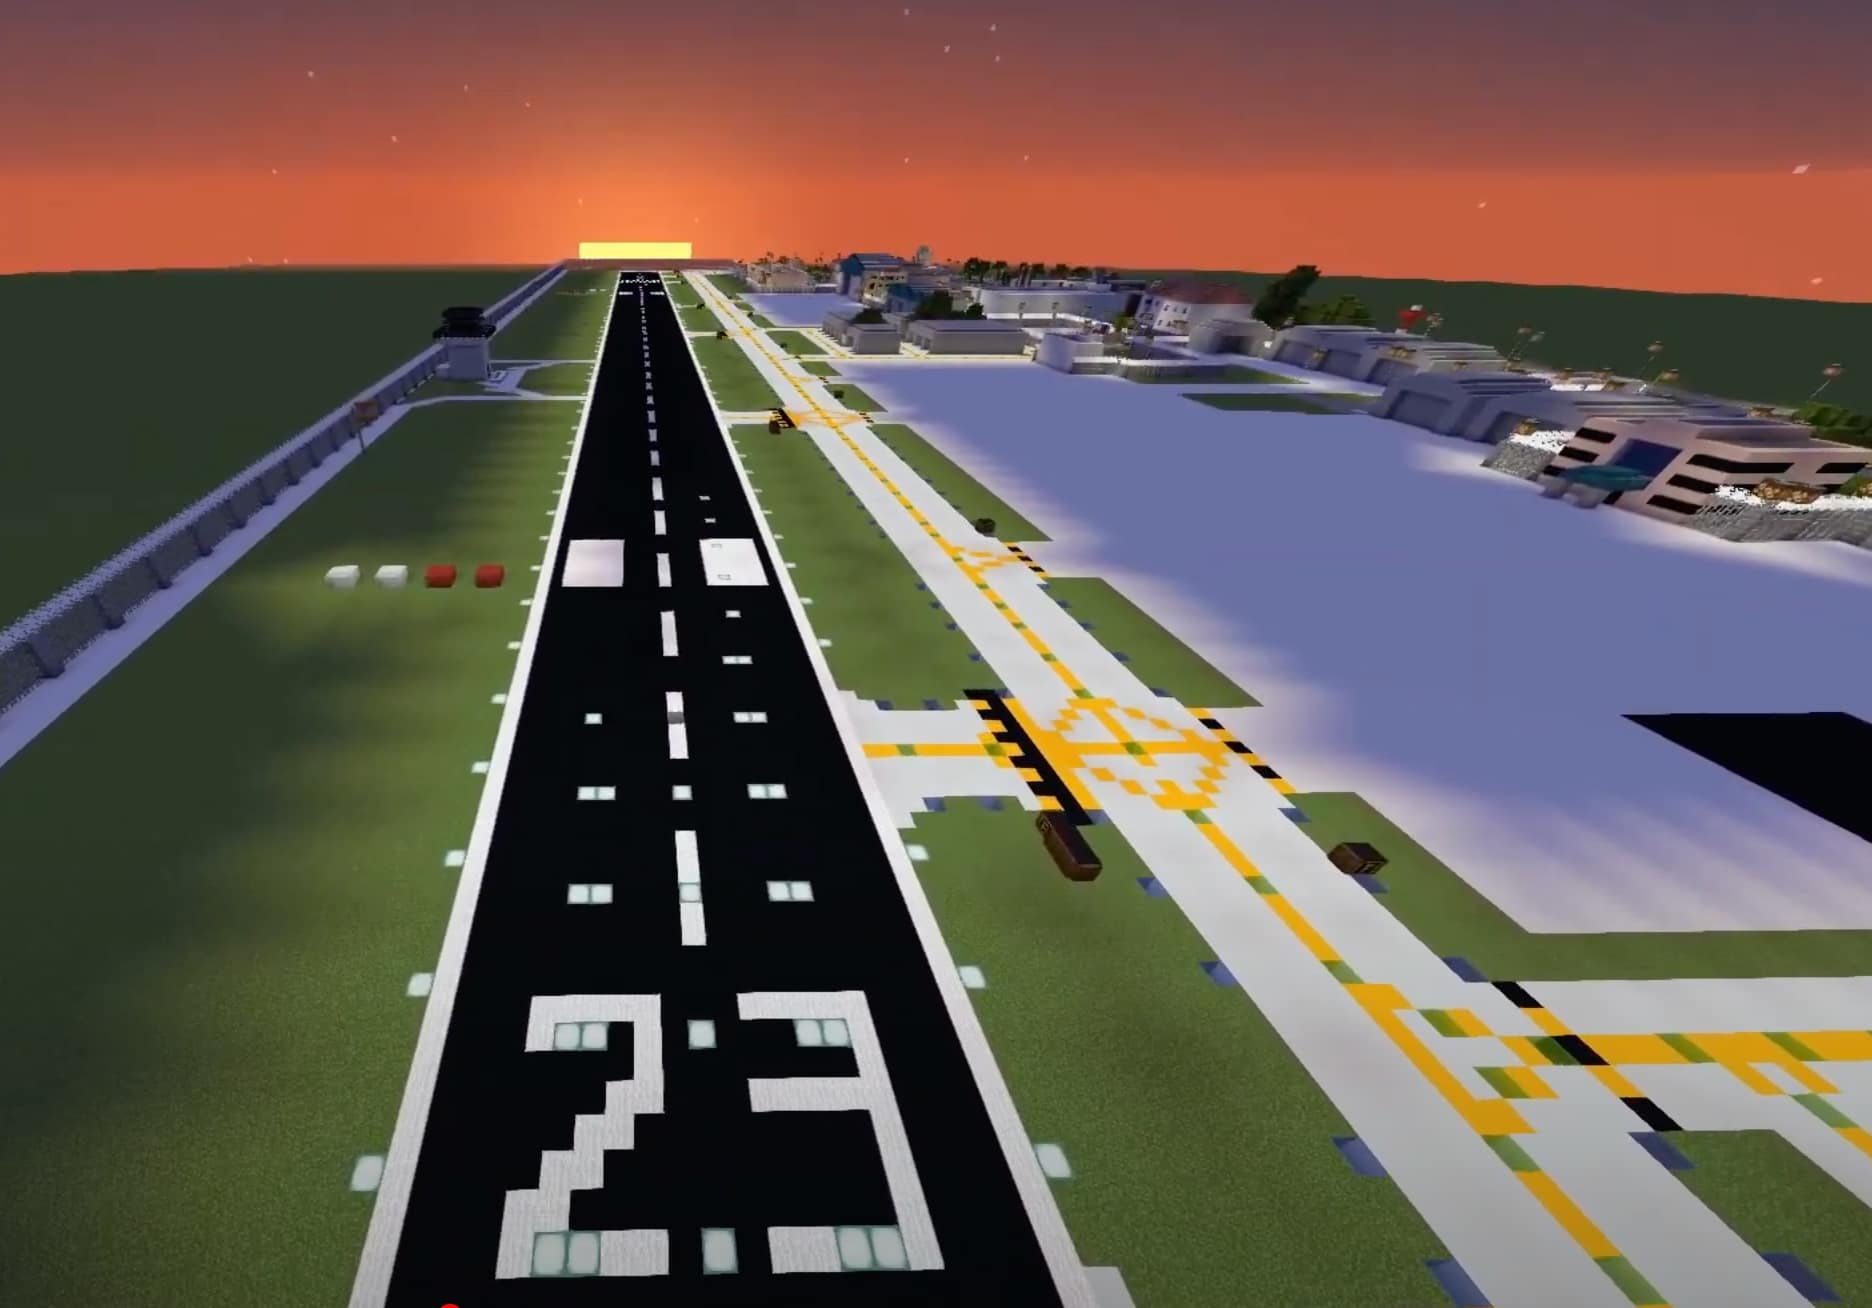 Aspiring Aviators Recreate Airport in Minecraft, Win Big at FAA Design  Competition | Embry-Riddle Aeronautical University - Newsroom